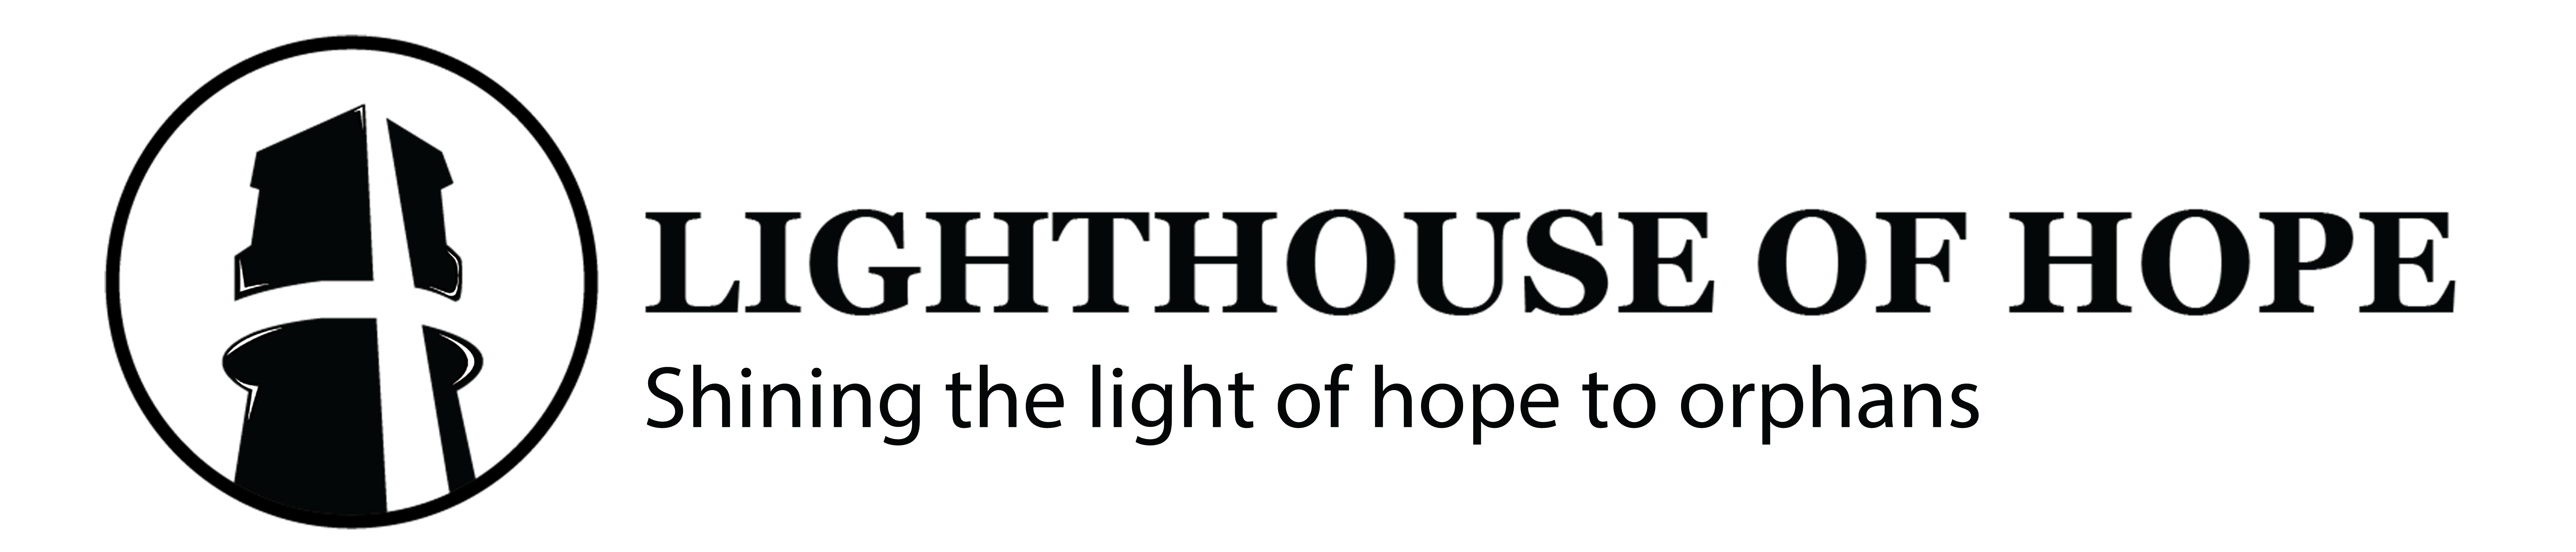 Lighthouse Of Hope MK